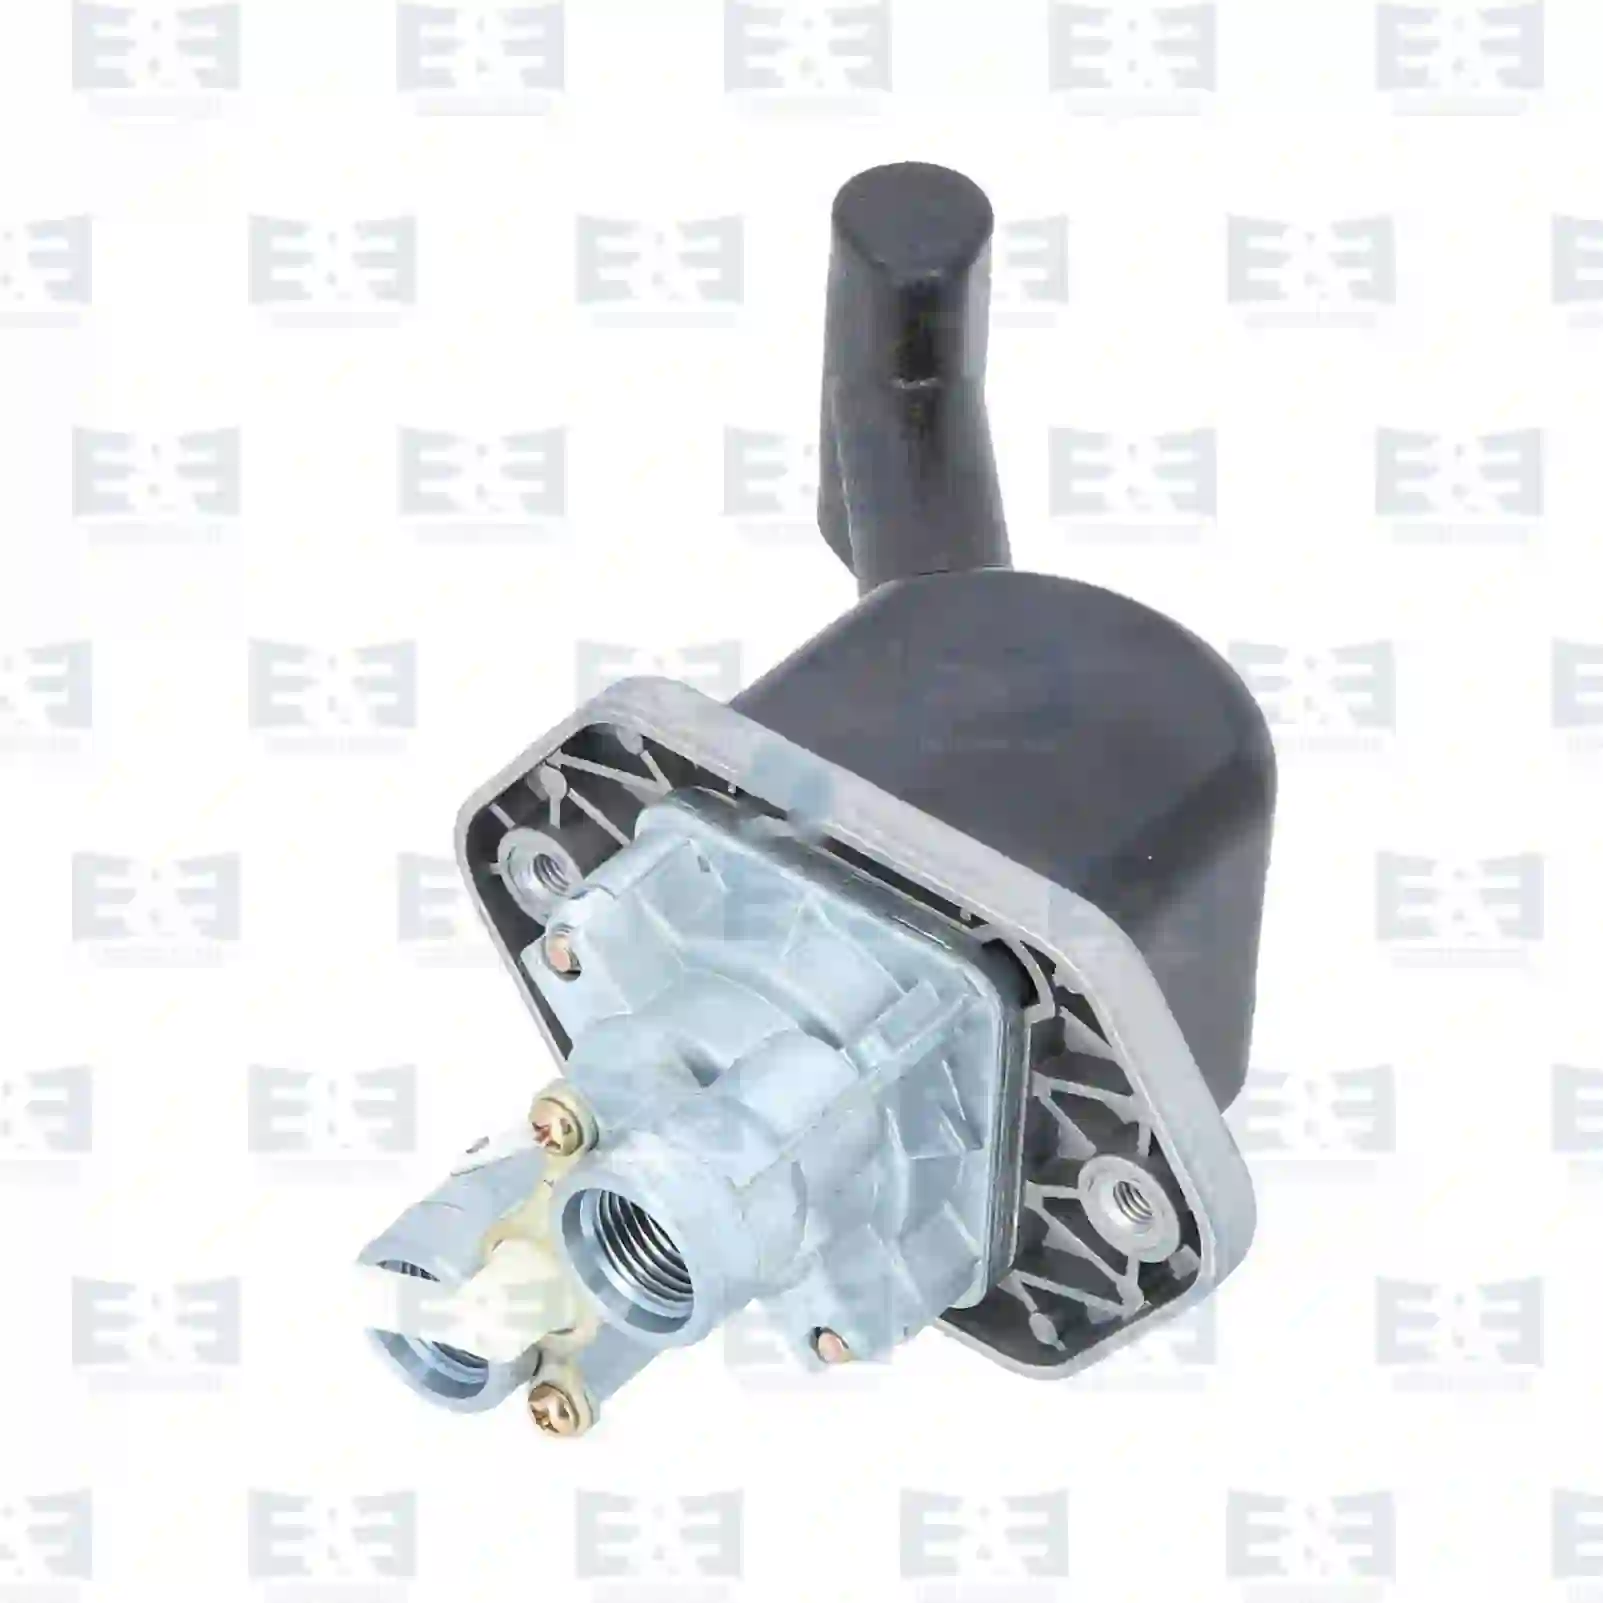  Hand brake valve || E&E Truck Spare Parts | Truck Spare Parts, Auotomotive Spare Parts